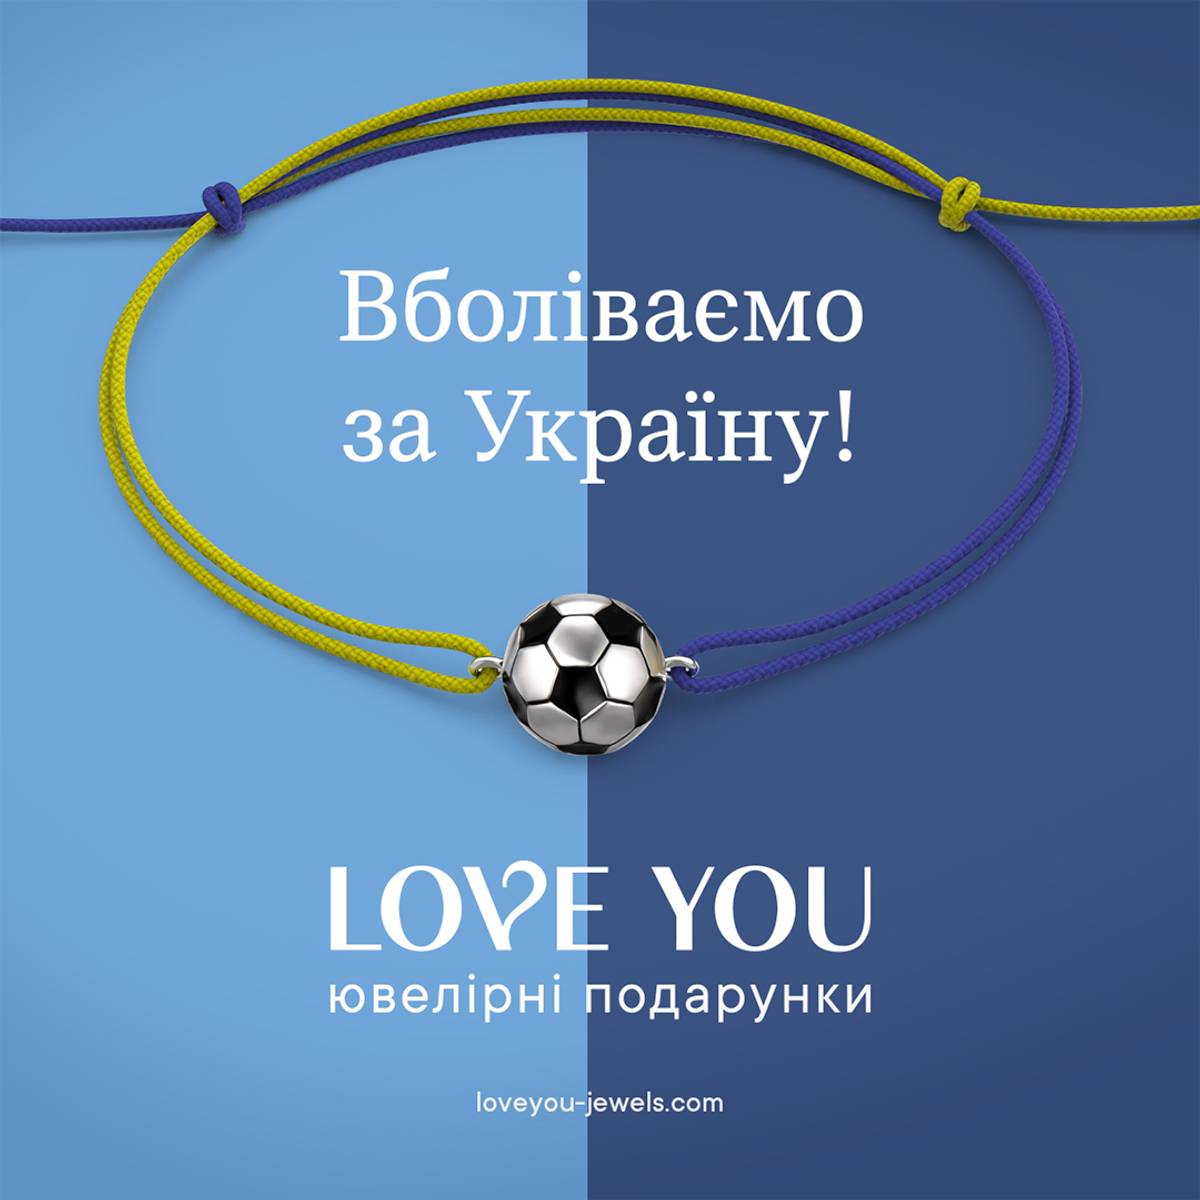 LOVE YOU brand has hidden silver bracelets for Euro-2024